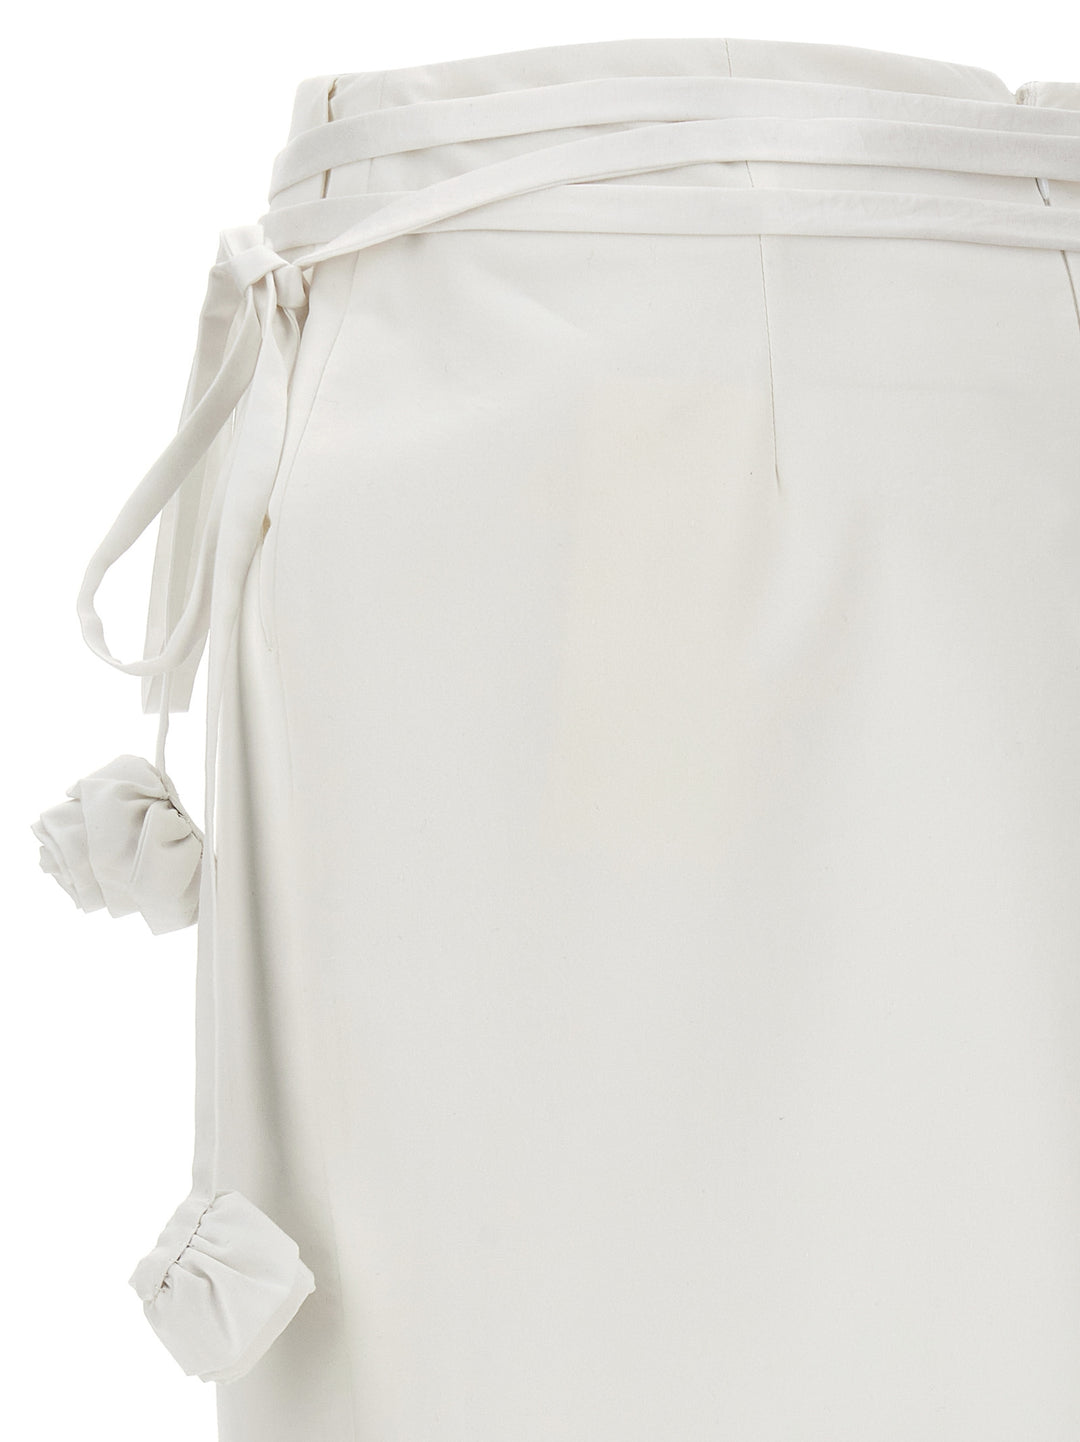 Floral Details Longuette Skirt Gonne Bianco